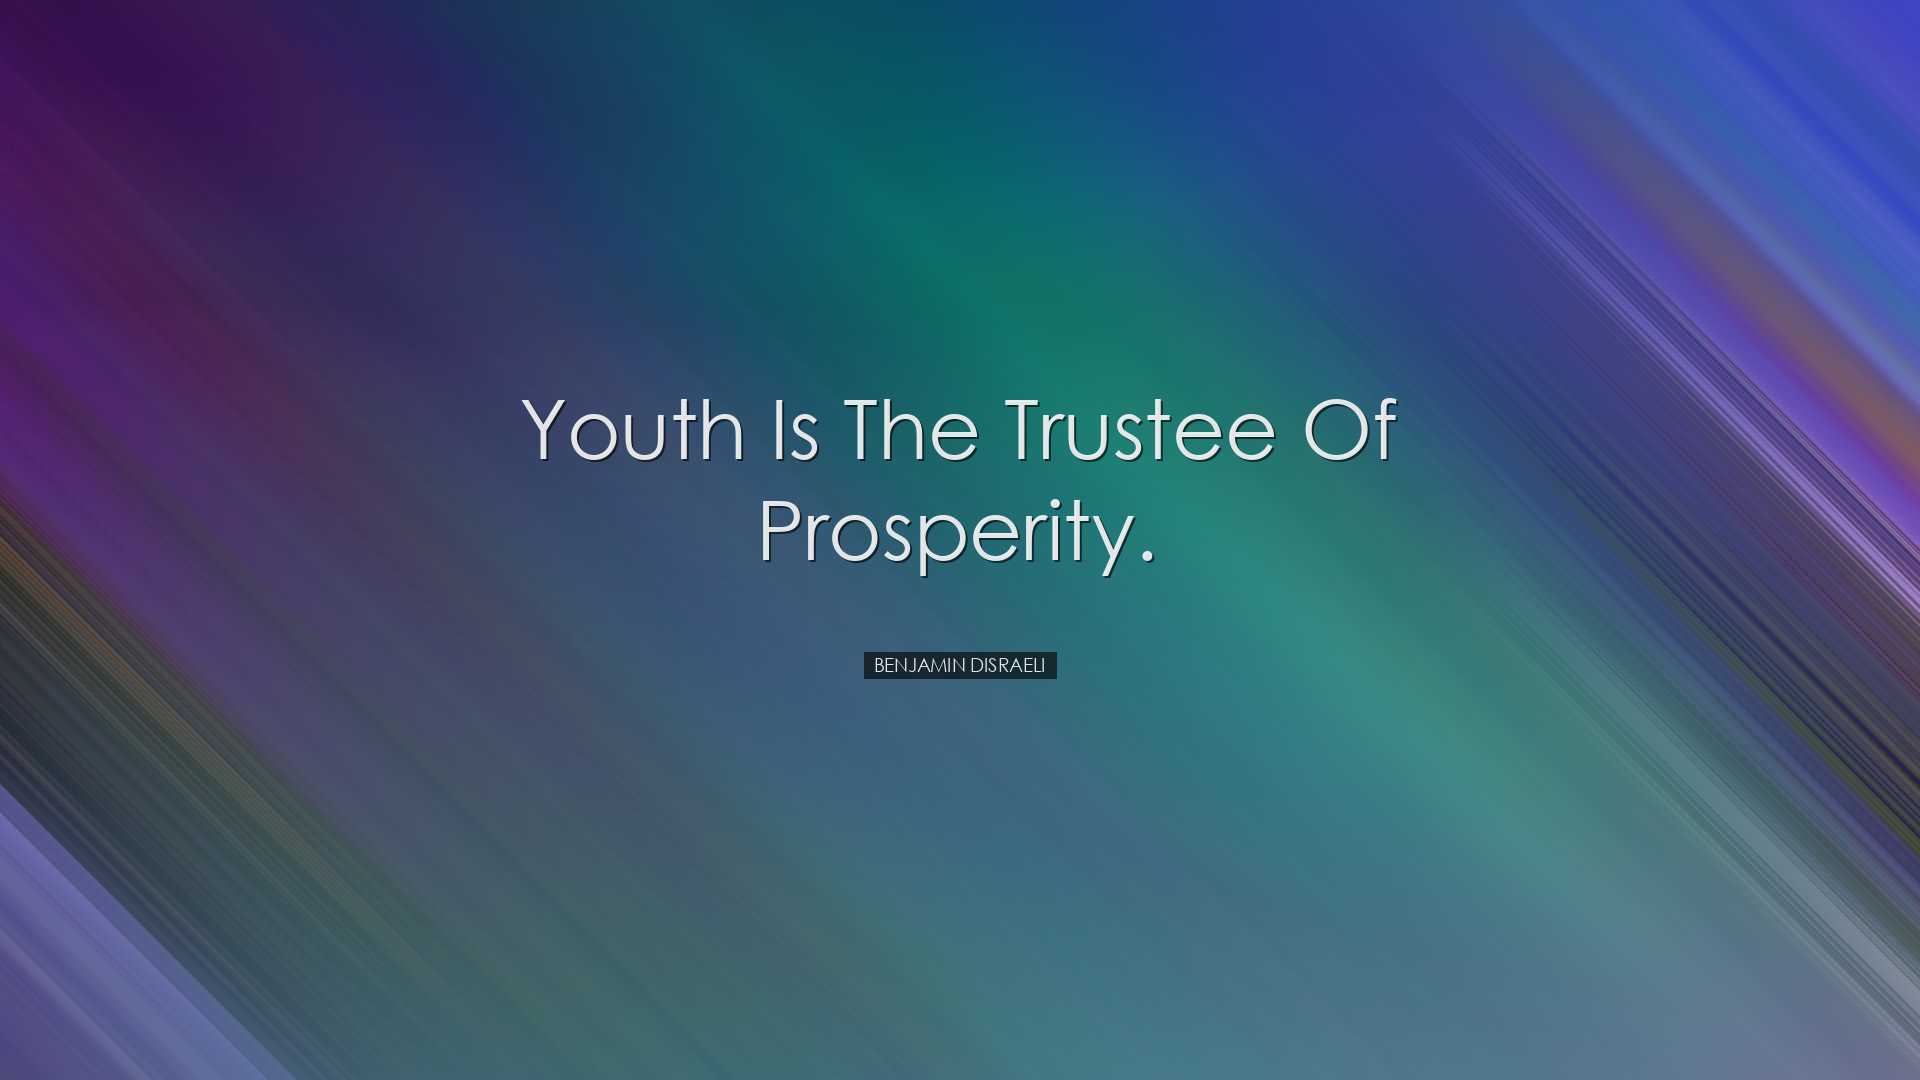 Youth is the trustee of prosperity. - Benjamin Disraeli